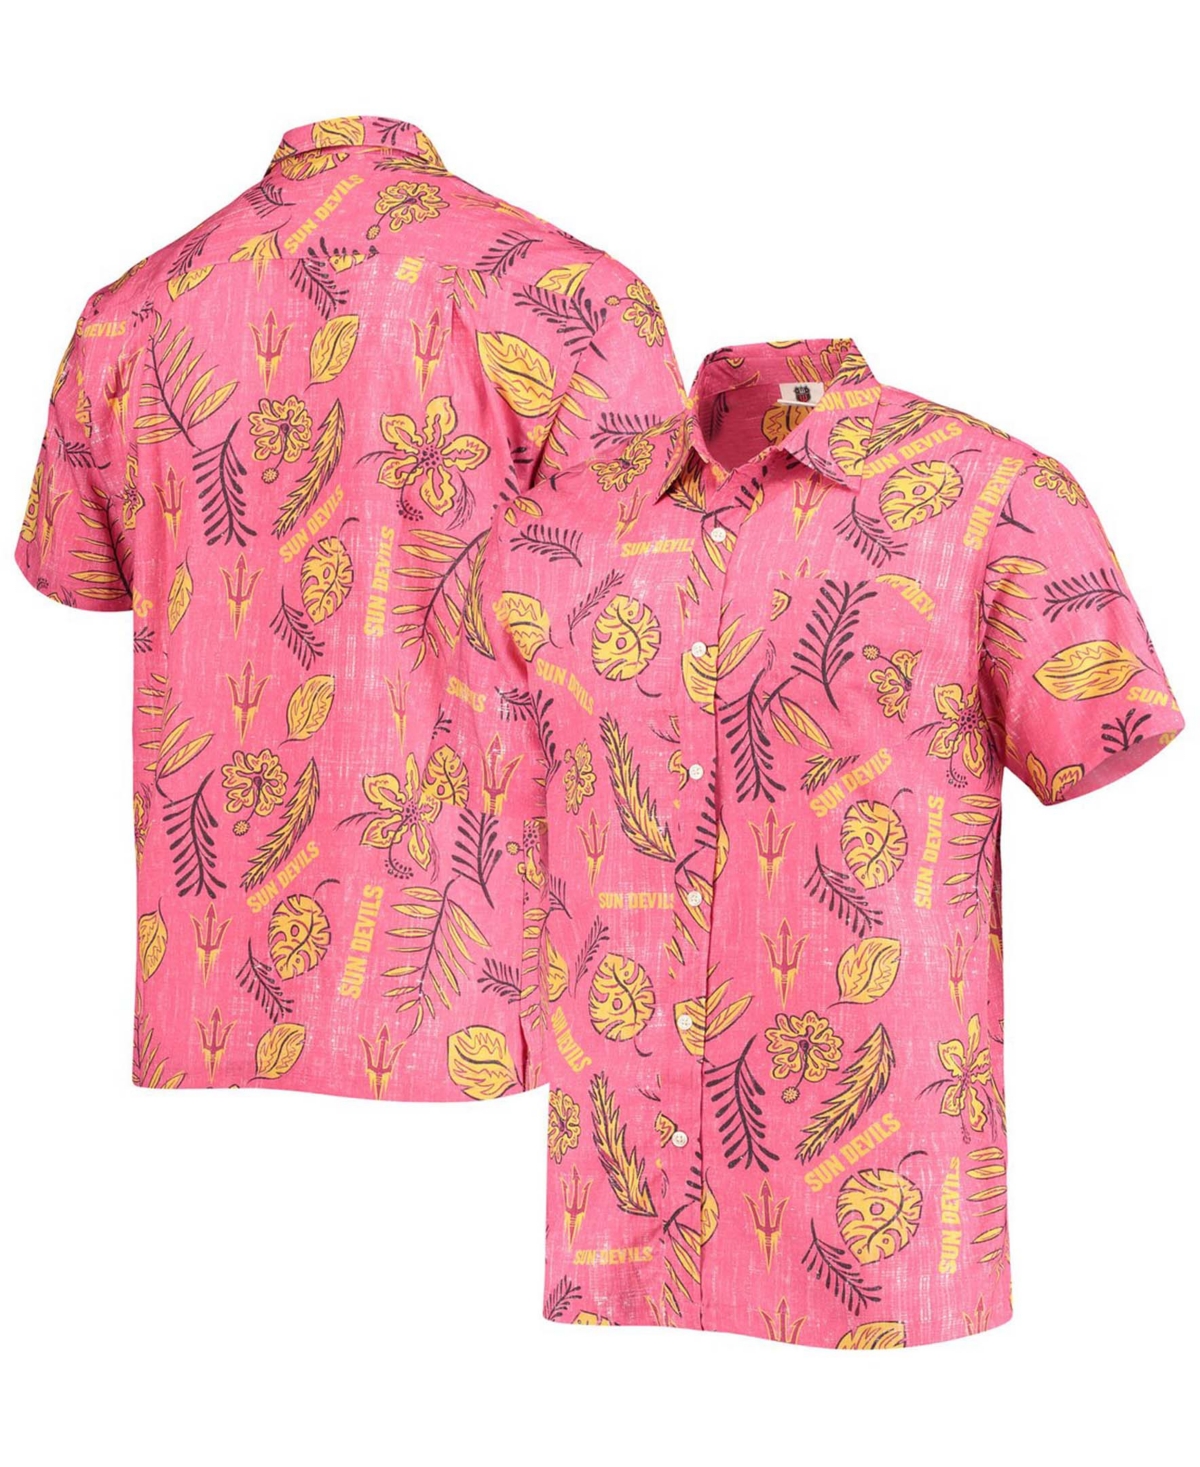 Men's Maroon Arizona State Sun Devils Vintage-Like Floral Button-Up Shirt - Maroon